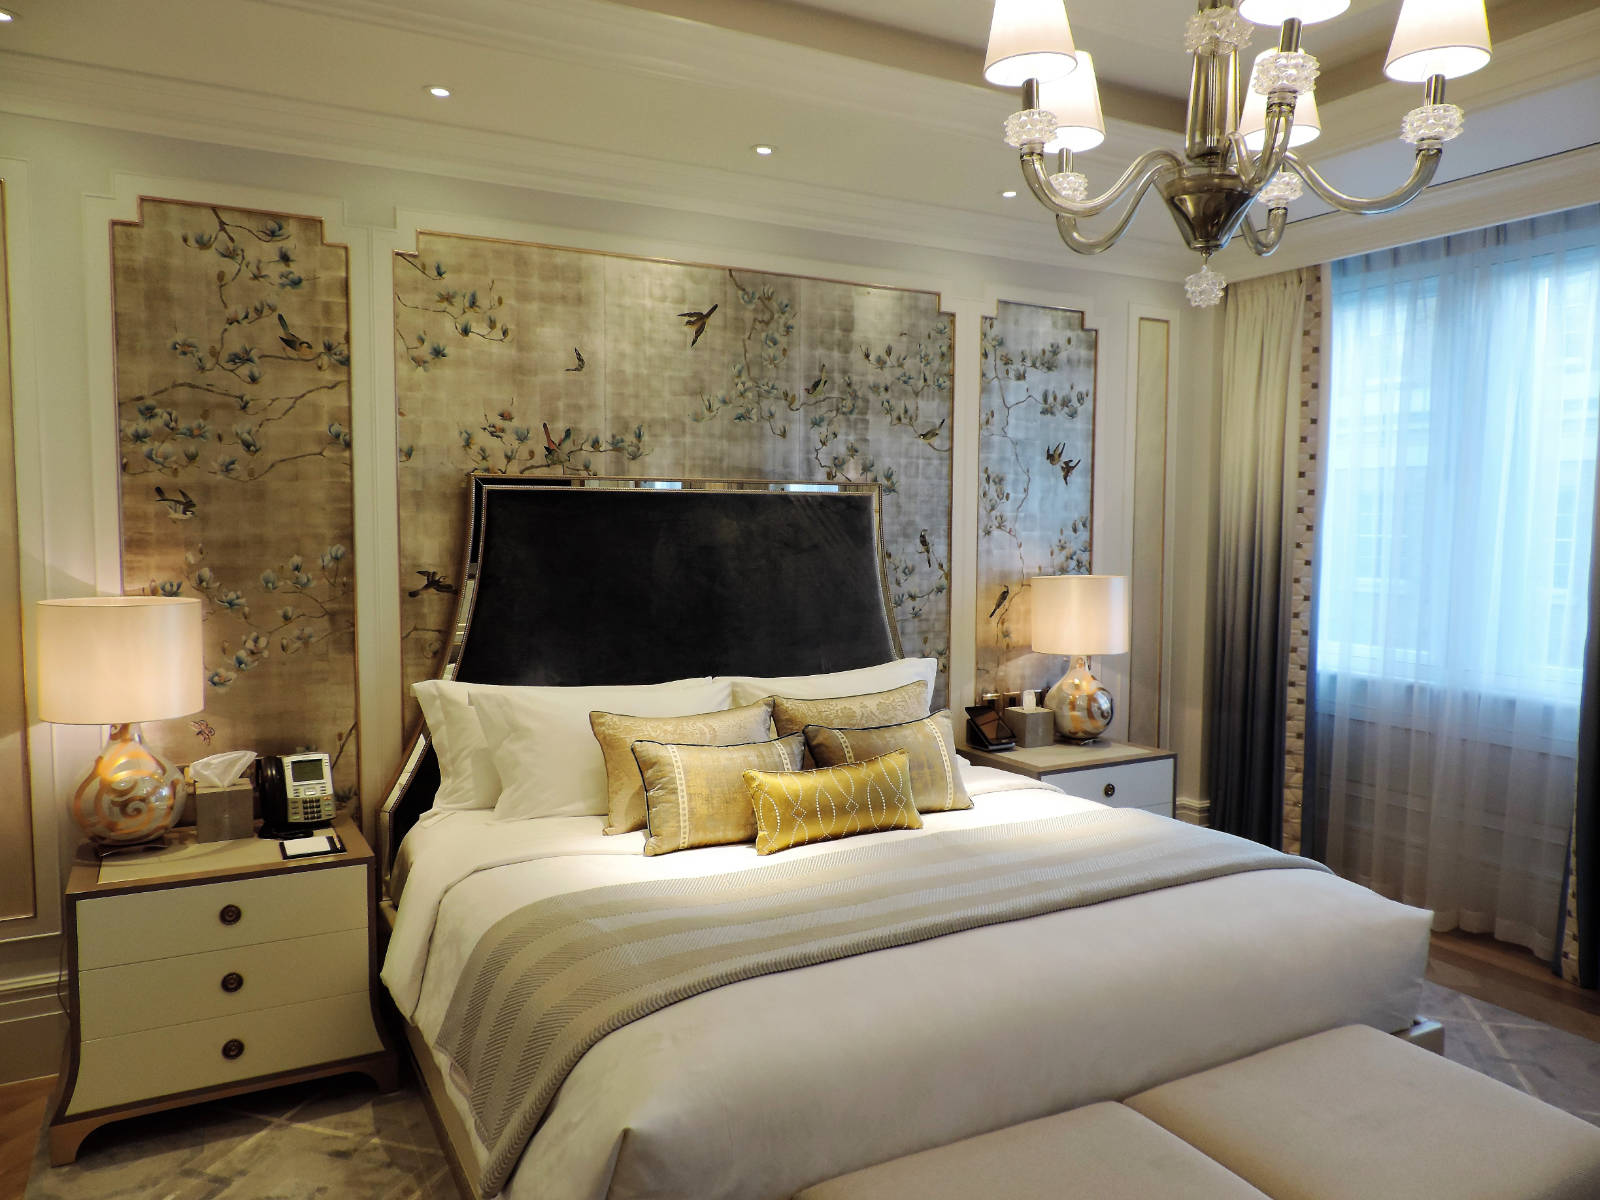 Room in the Langham hotel in London